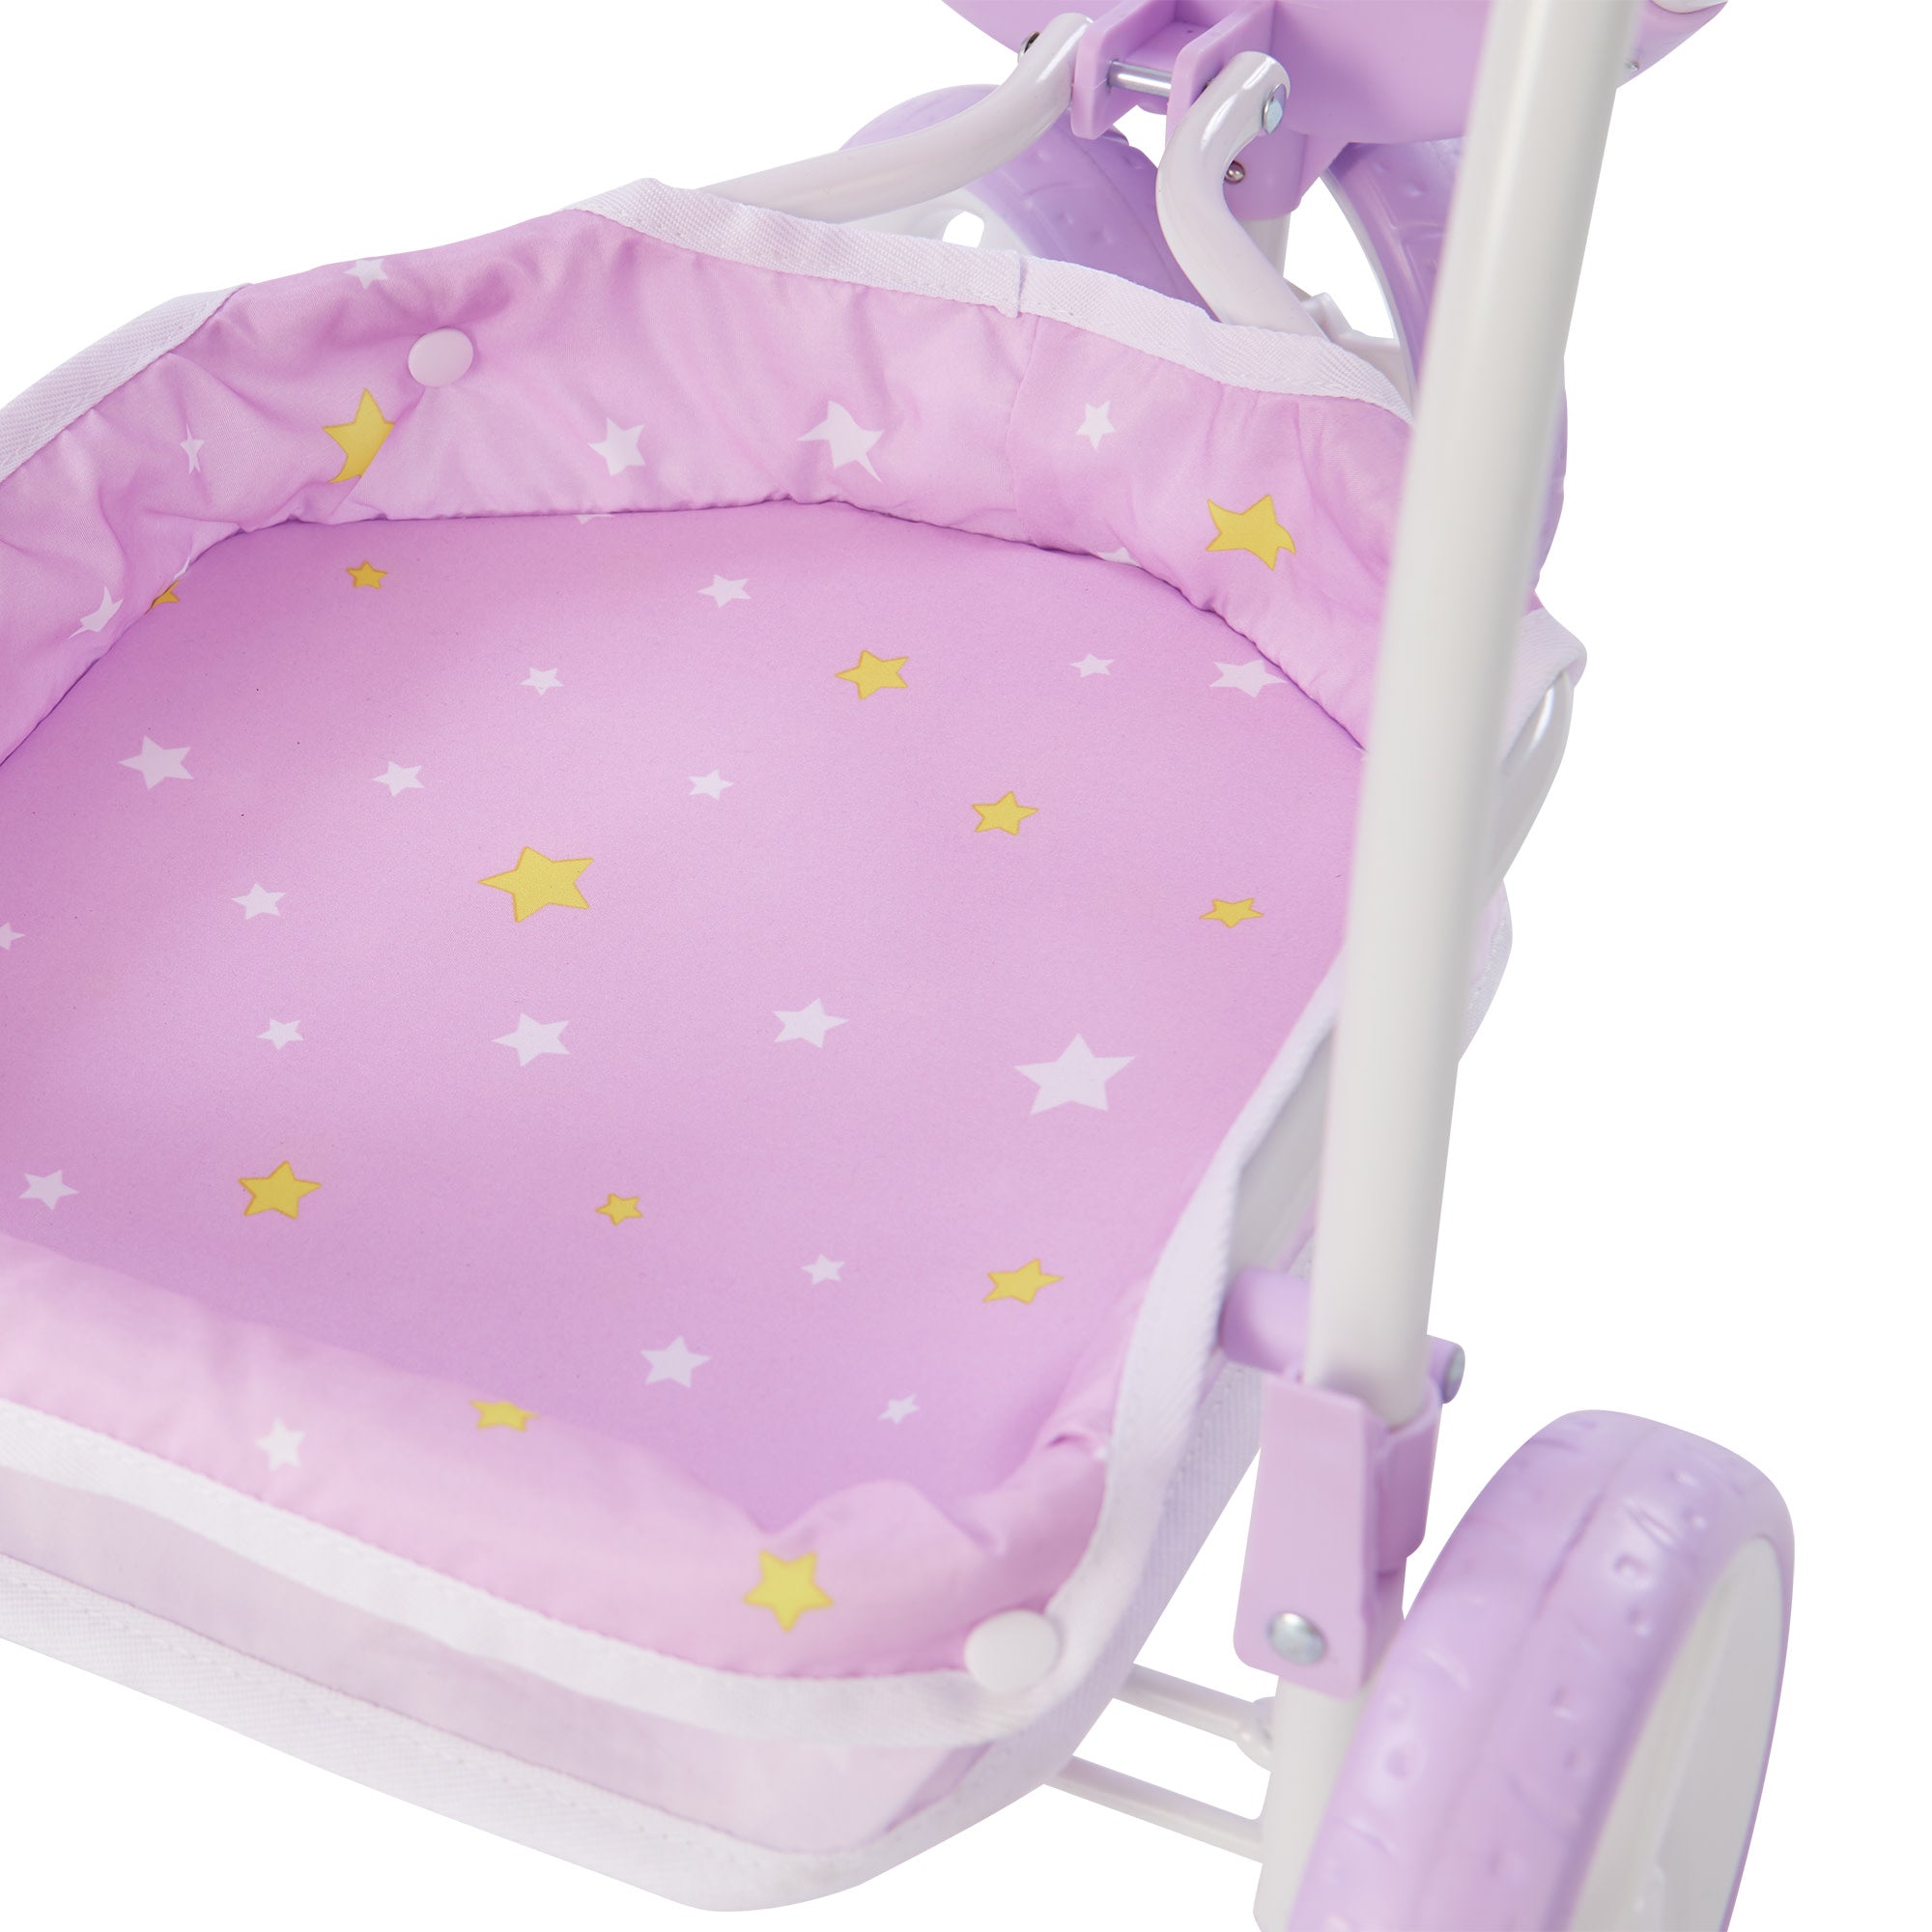 Olivia's Little World Twinkle Stars Princess 2-in-1 Baby Doll Stroller, Purple